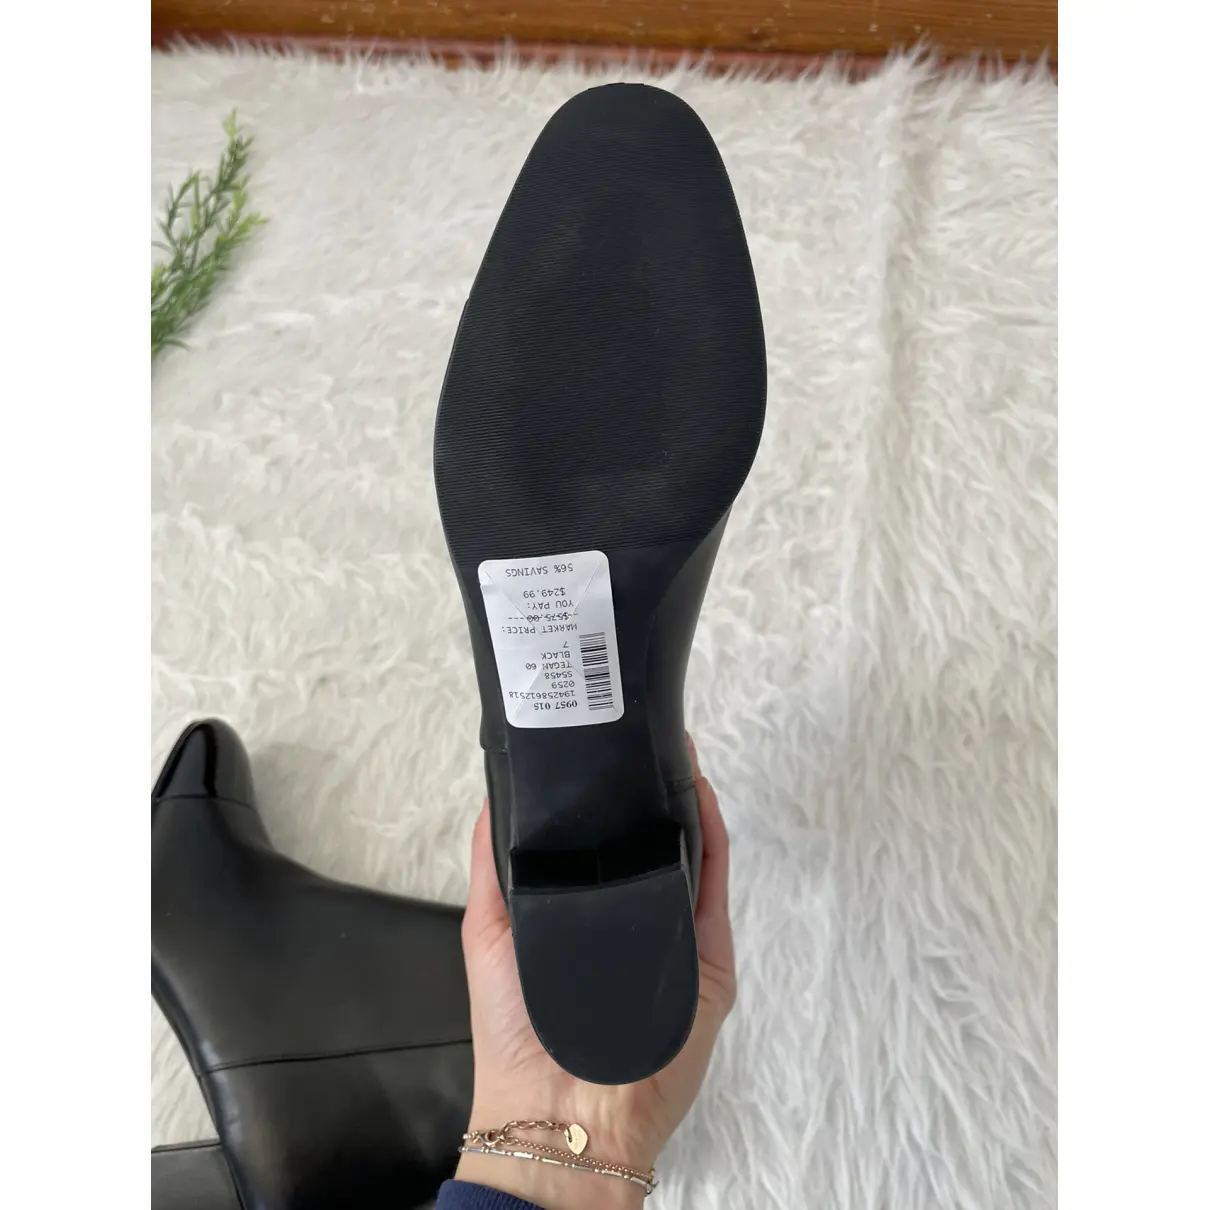 Buy Stuart Weitzman Leather ankle boots online